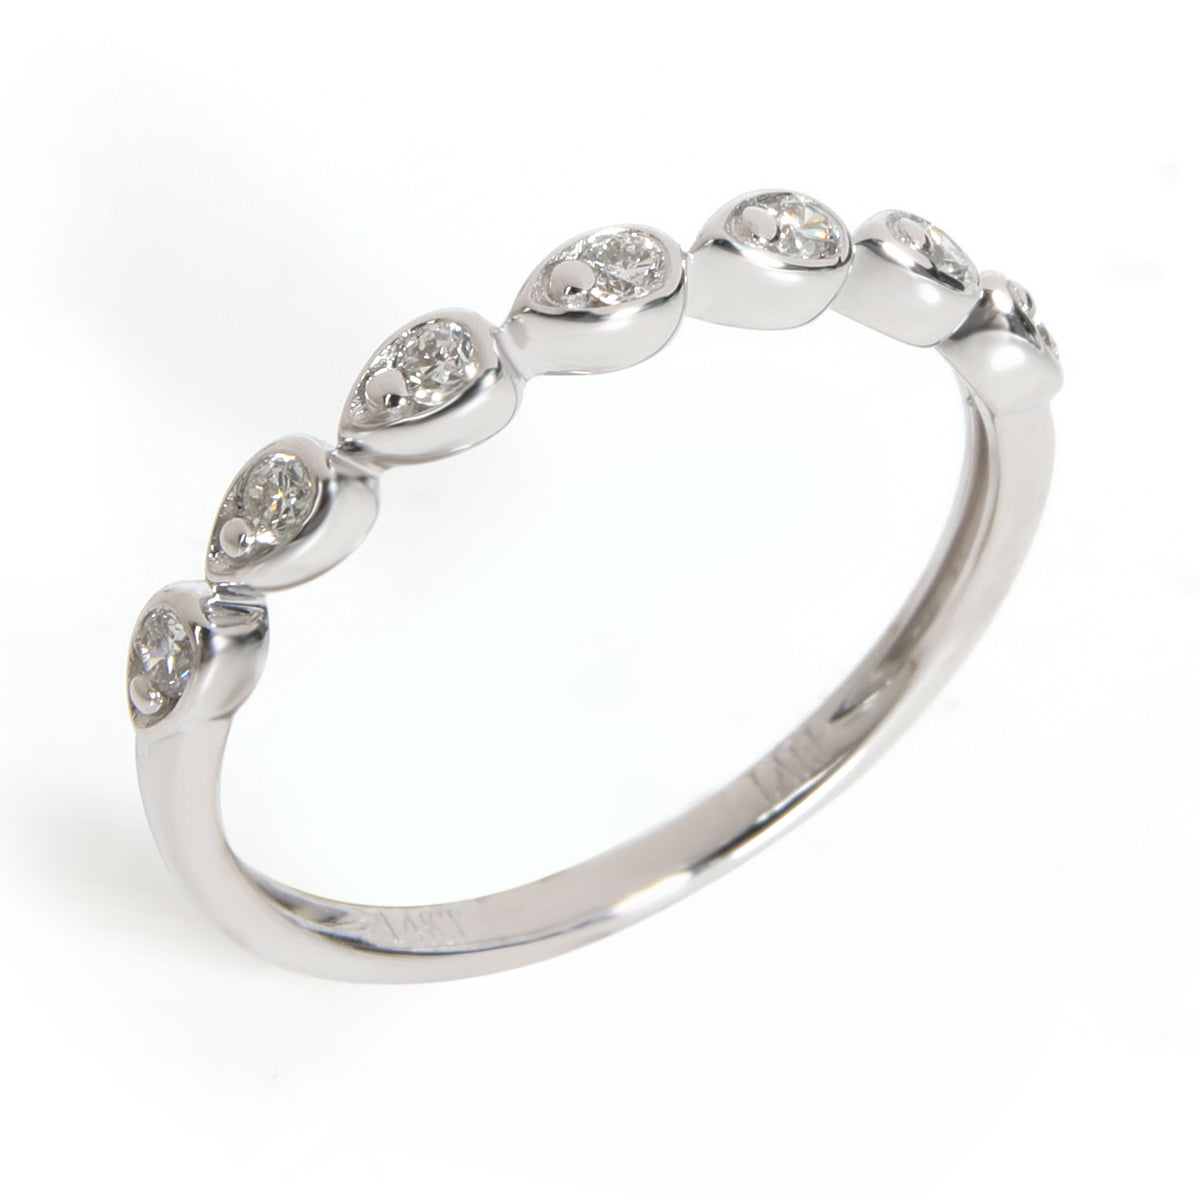 Bezel Set Stackable Diamond Ring in 14KT White Gold 0.17 ctw